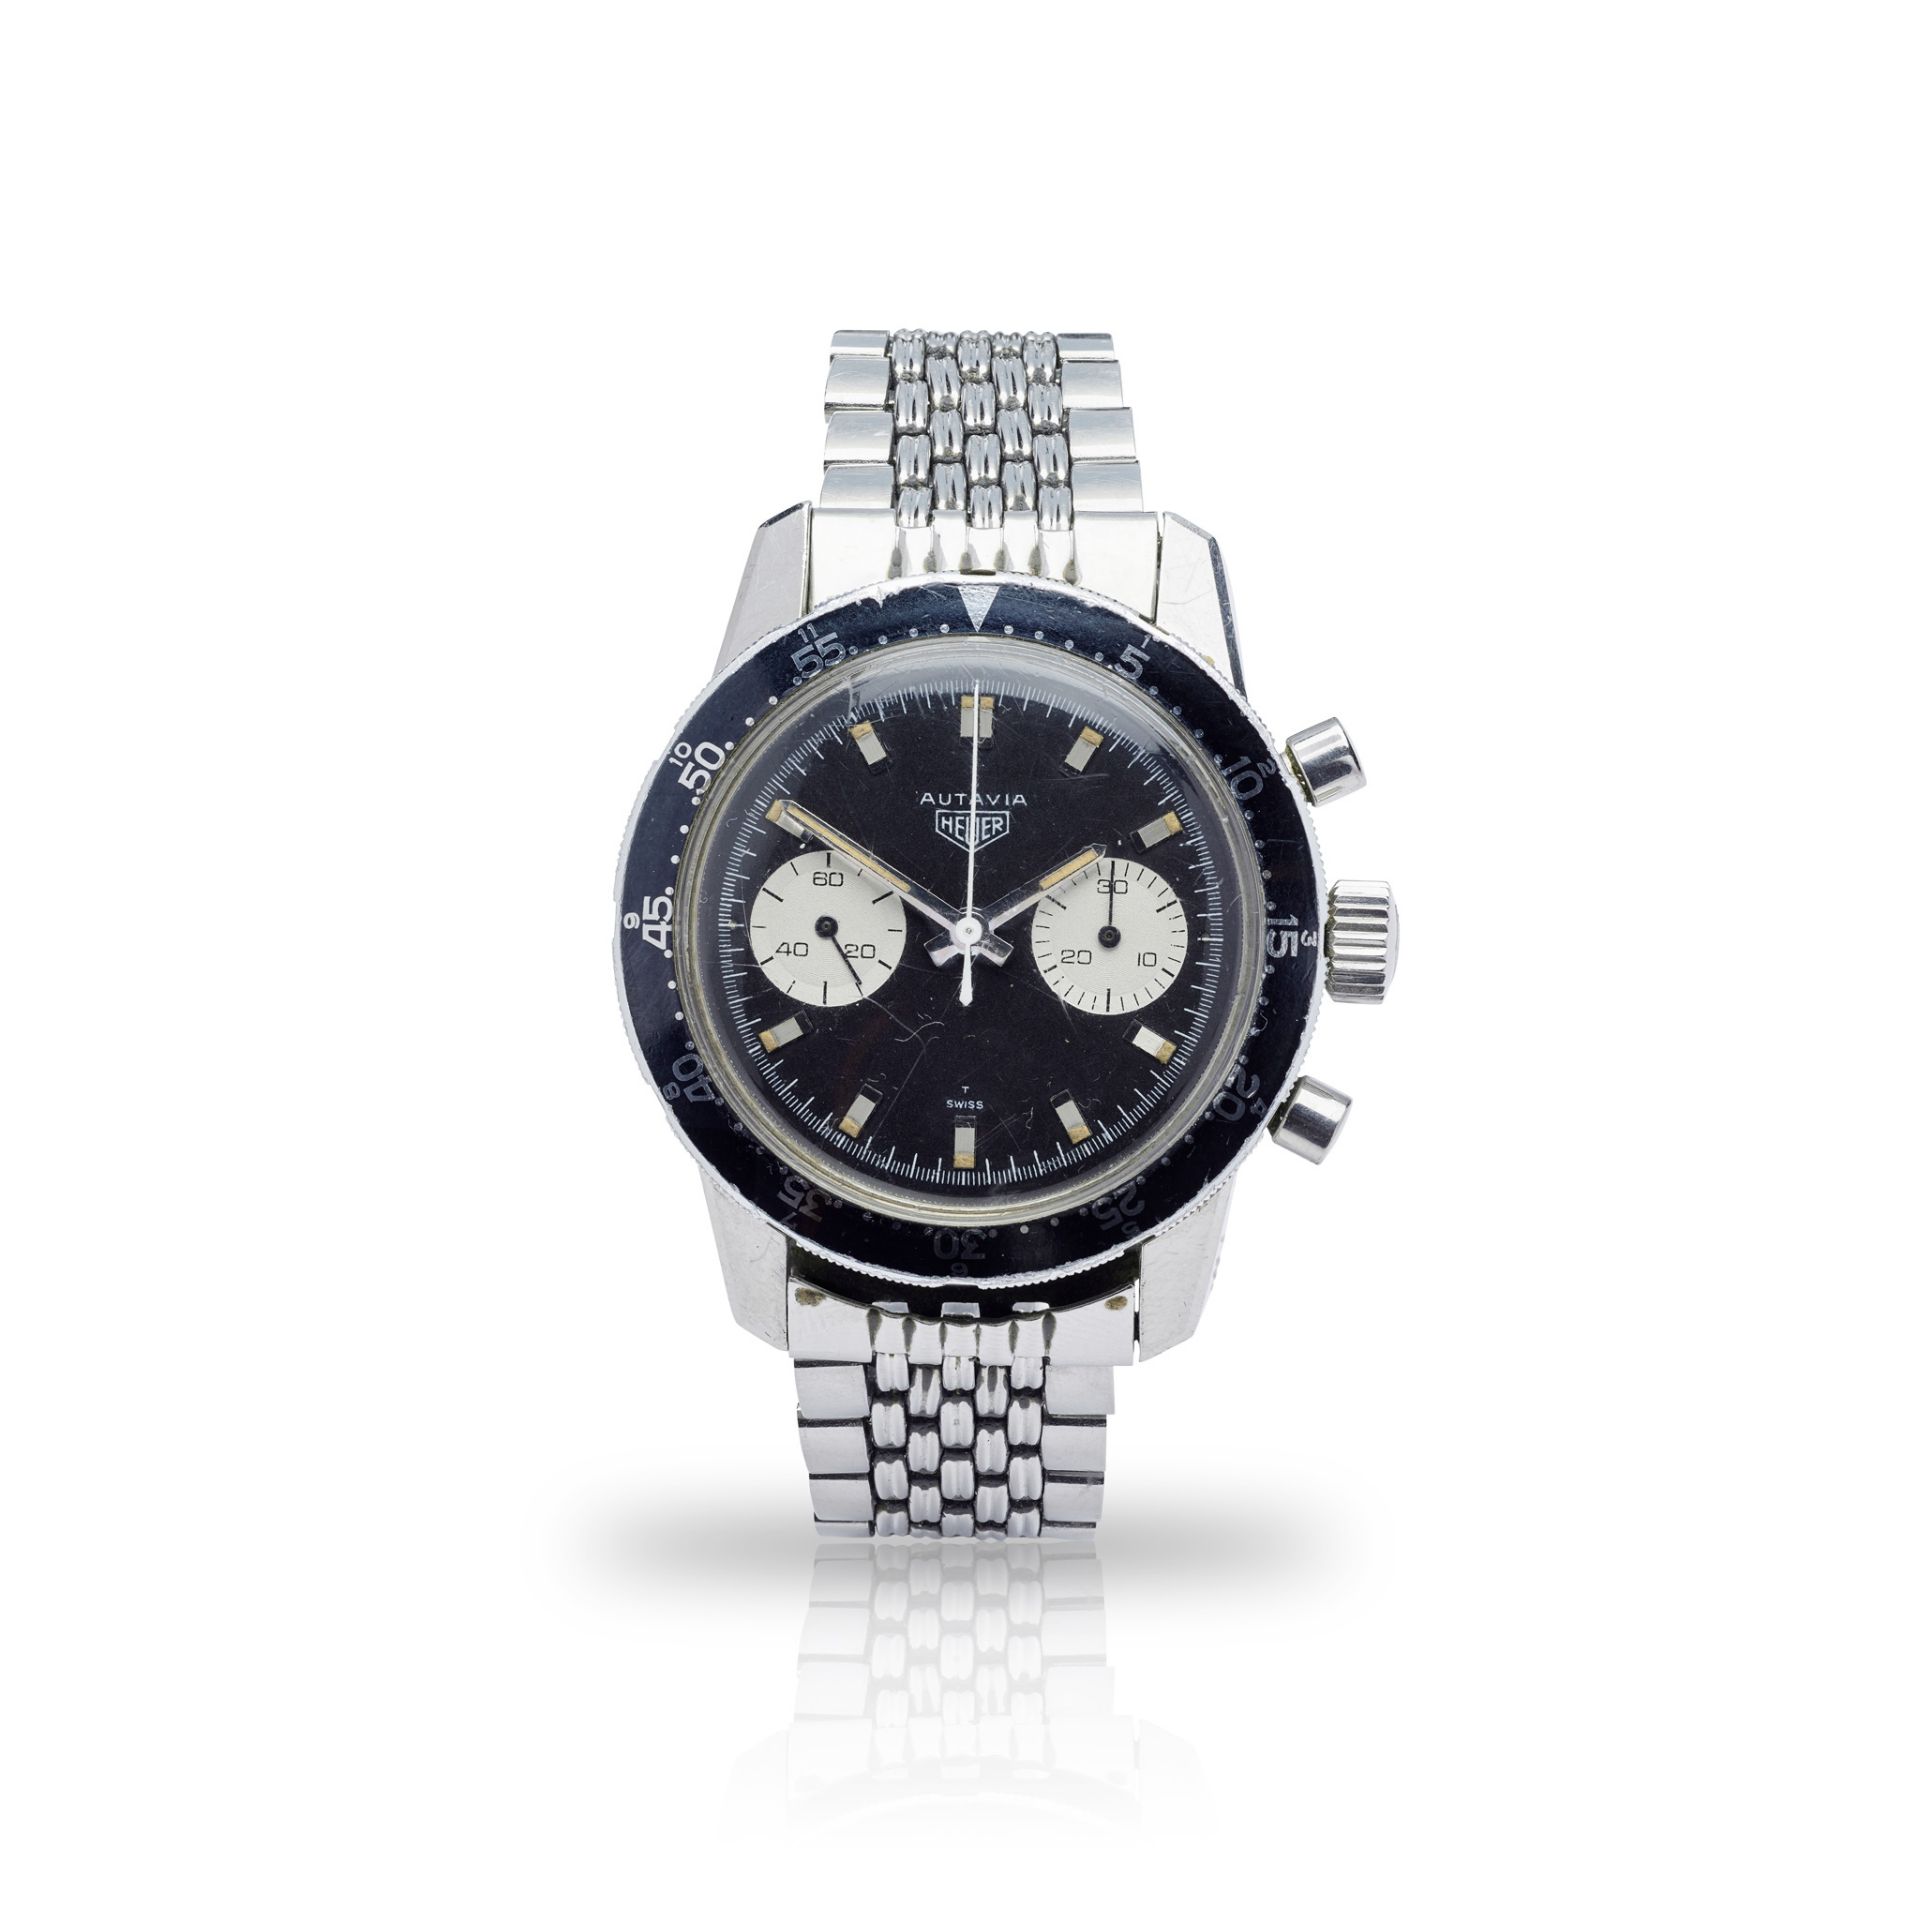 Heuer: a chronograph wrist watch